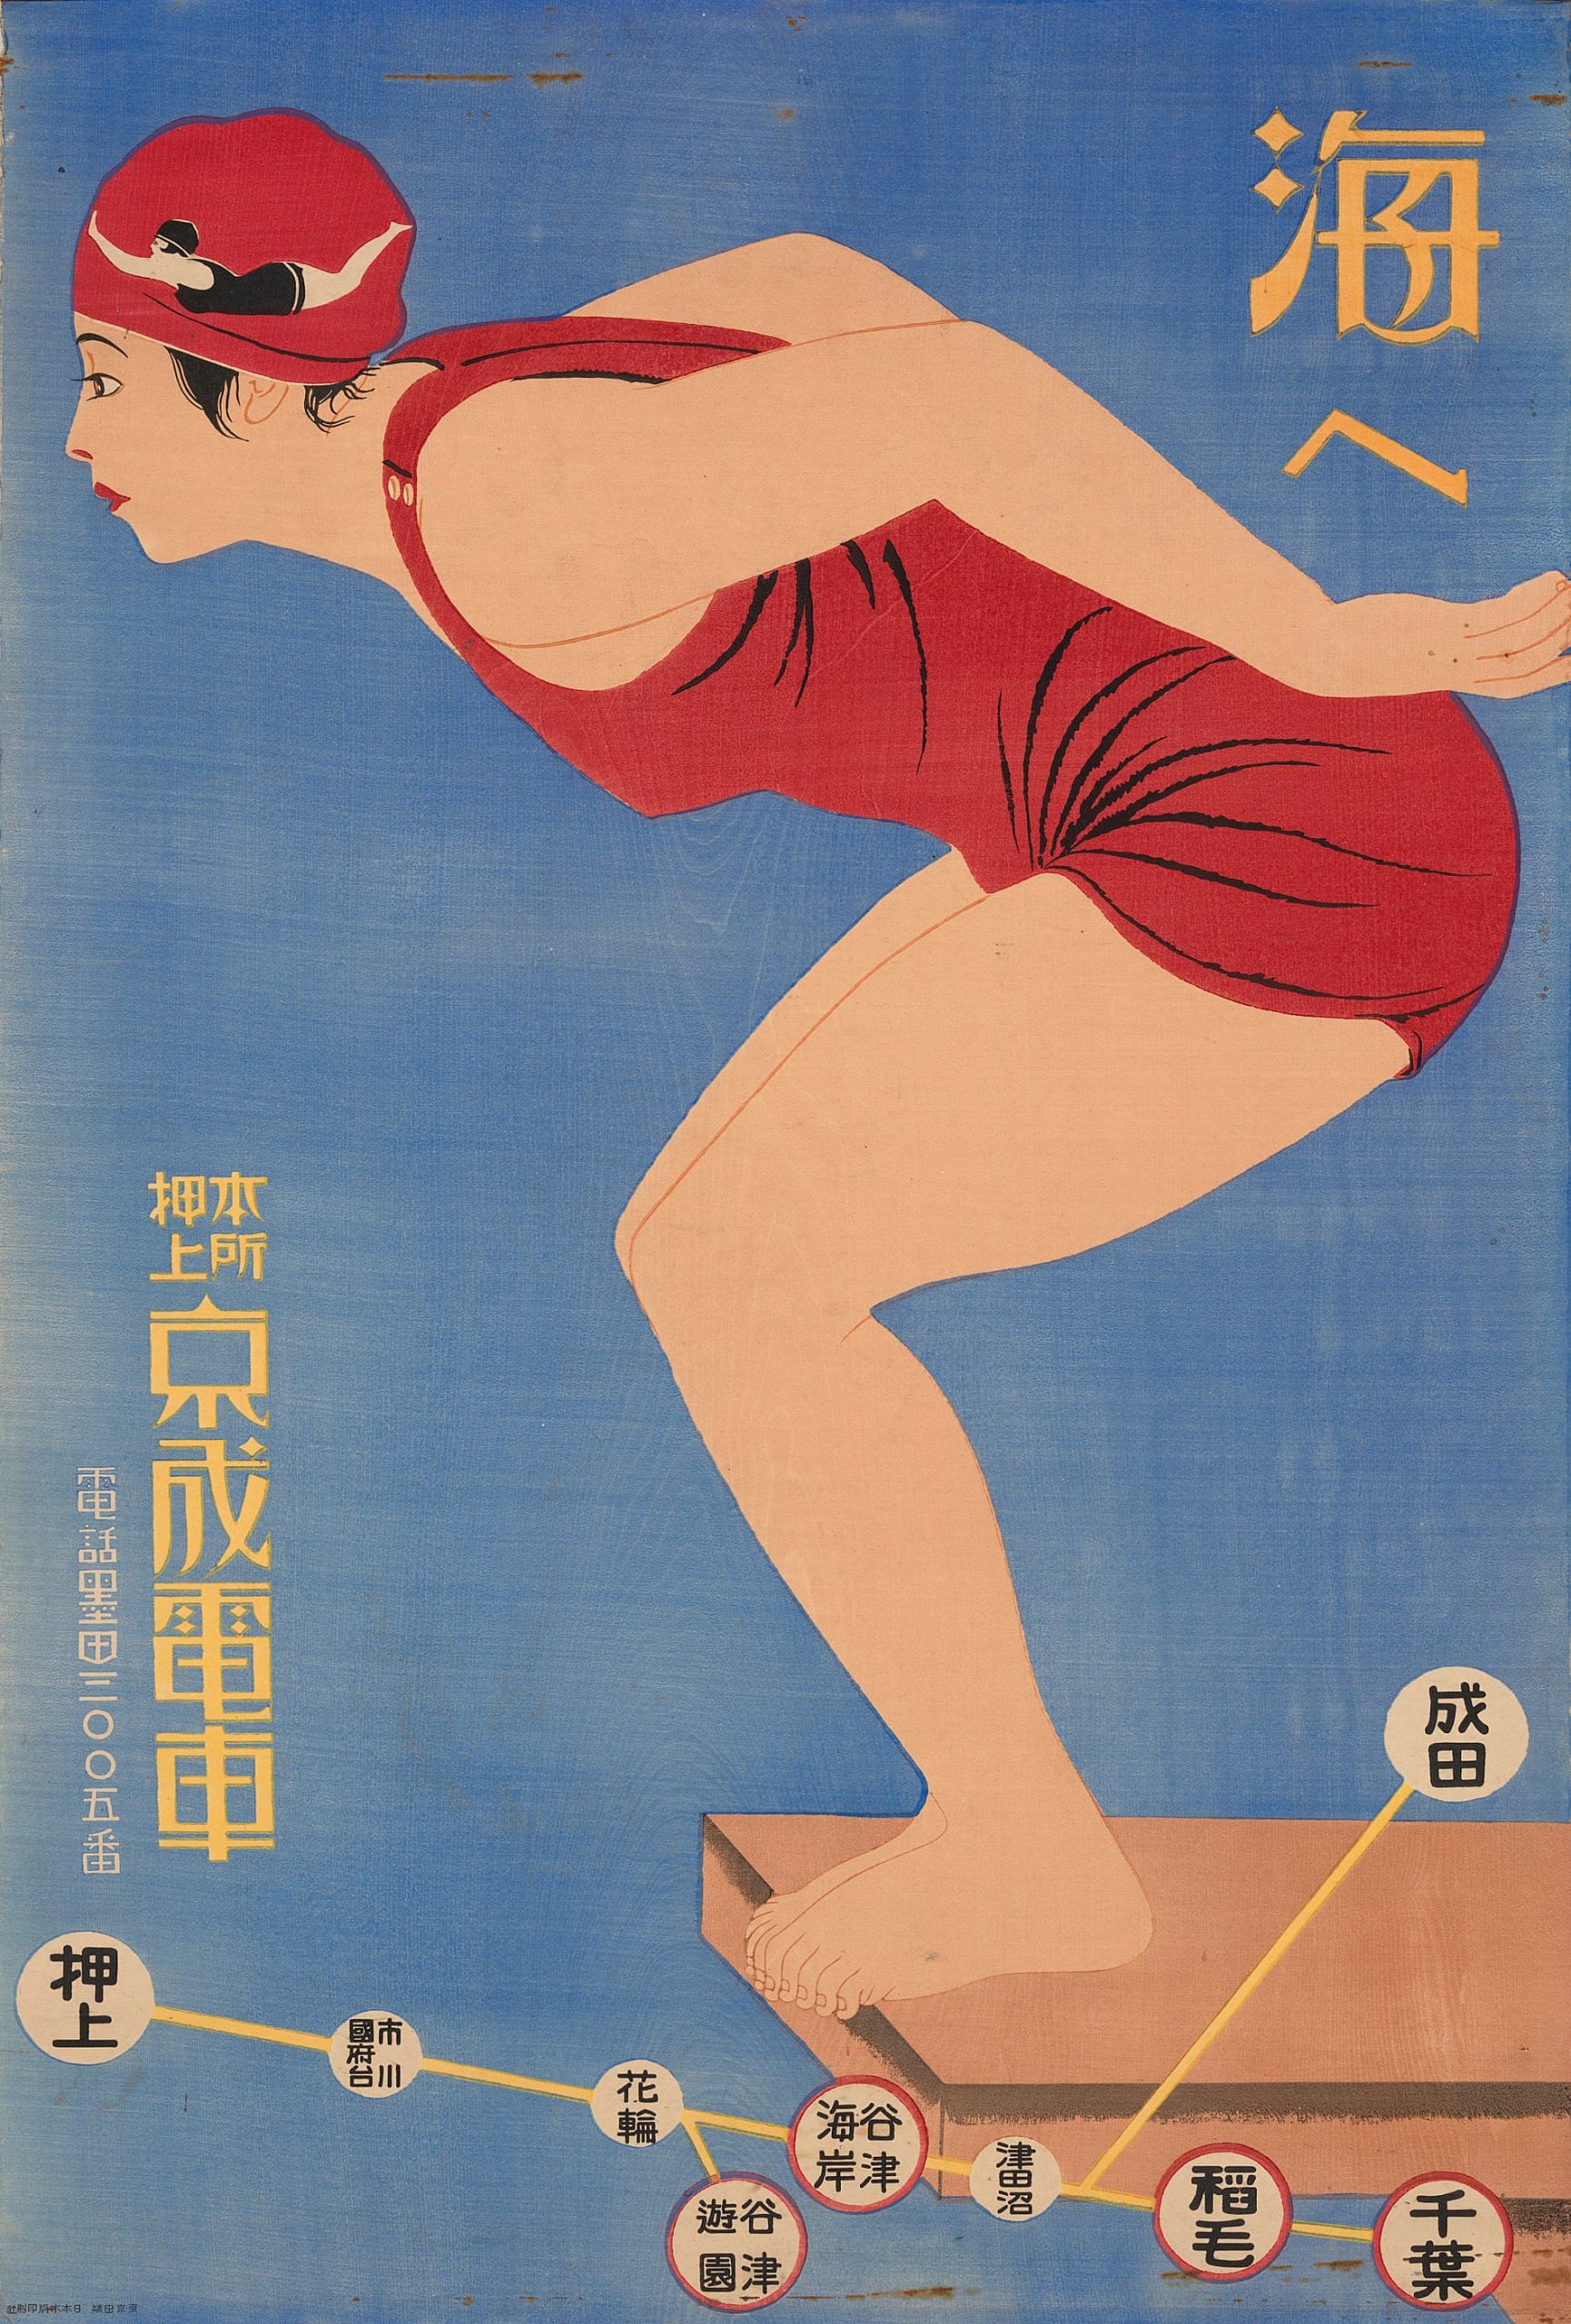 10_To the Sea, Shaboano Kiyosaku (ca. 1930)